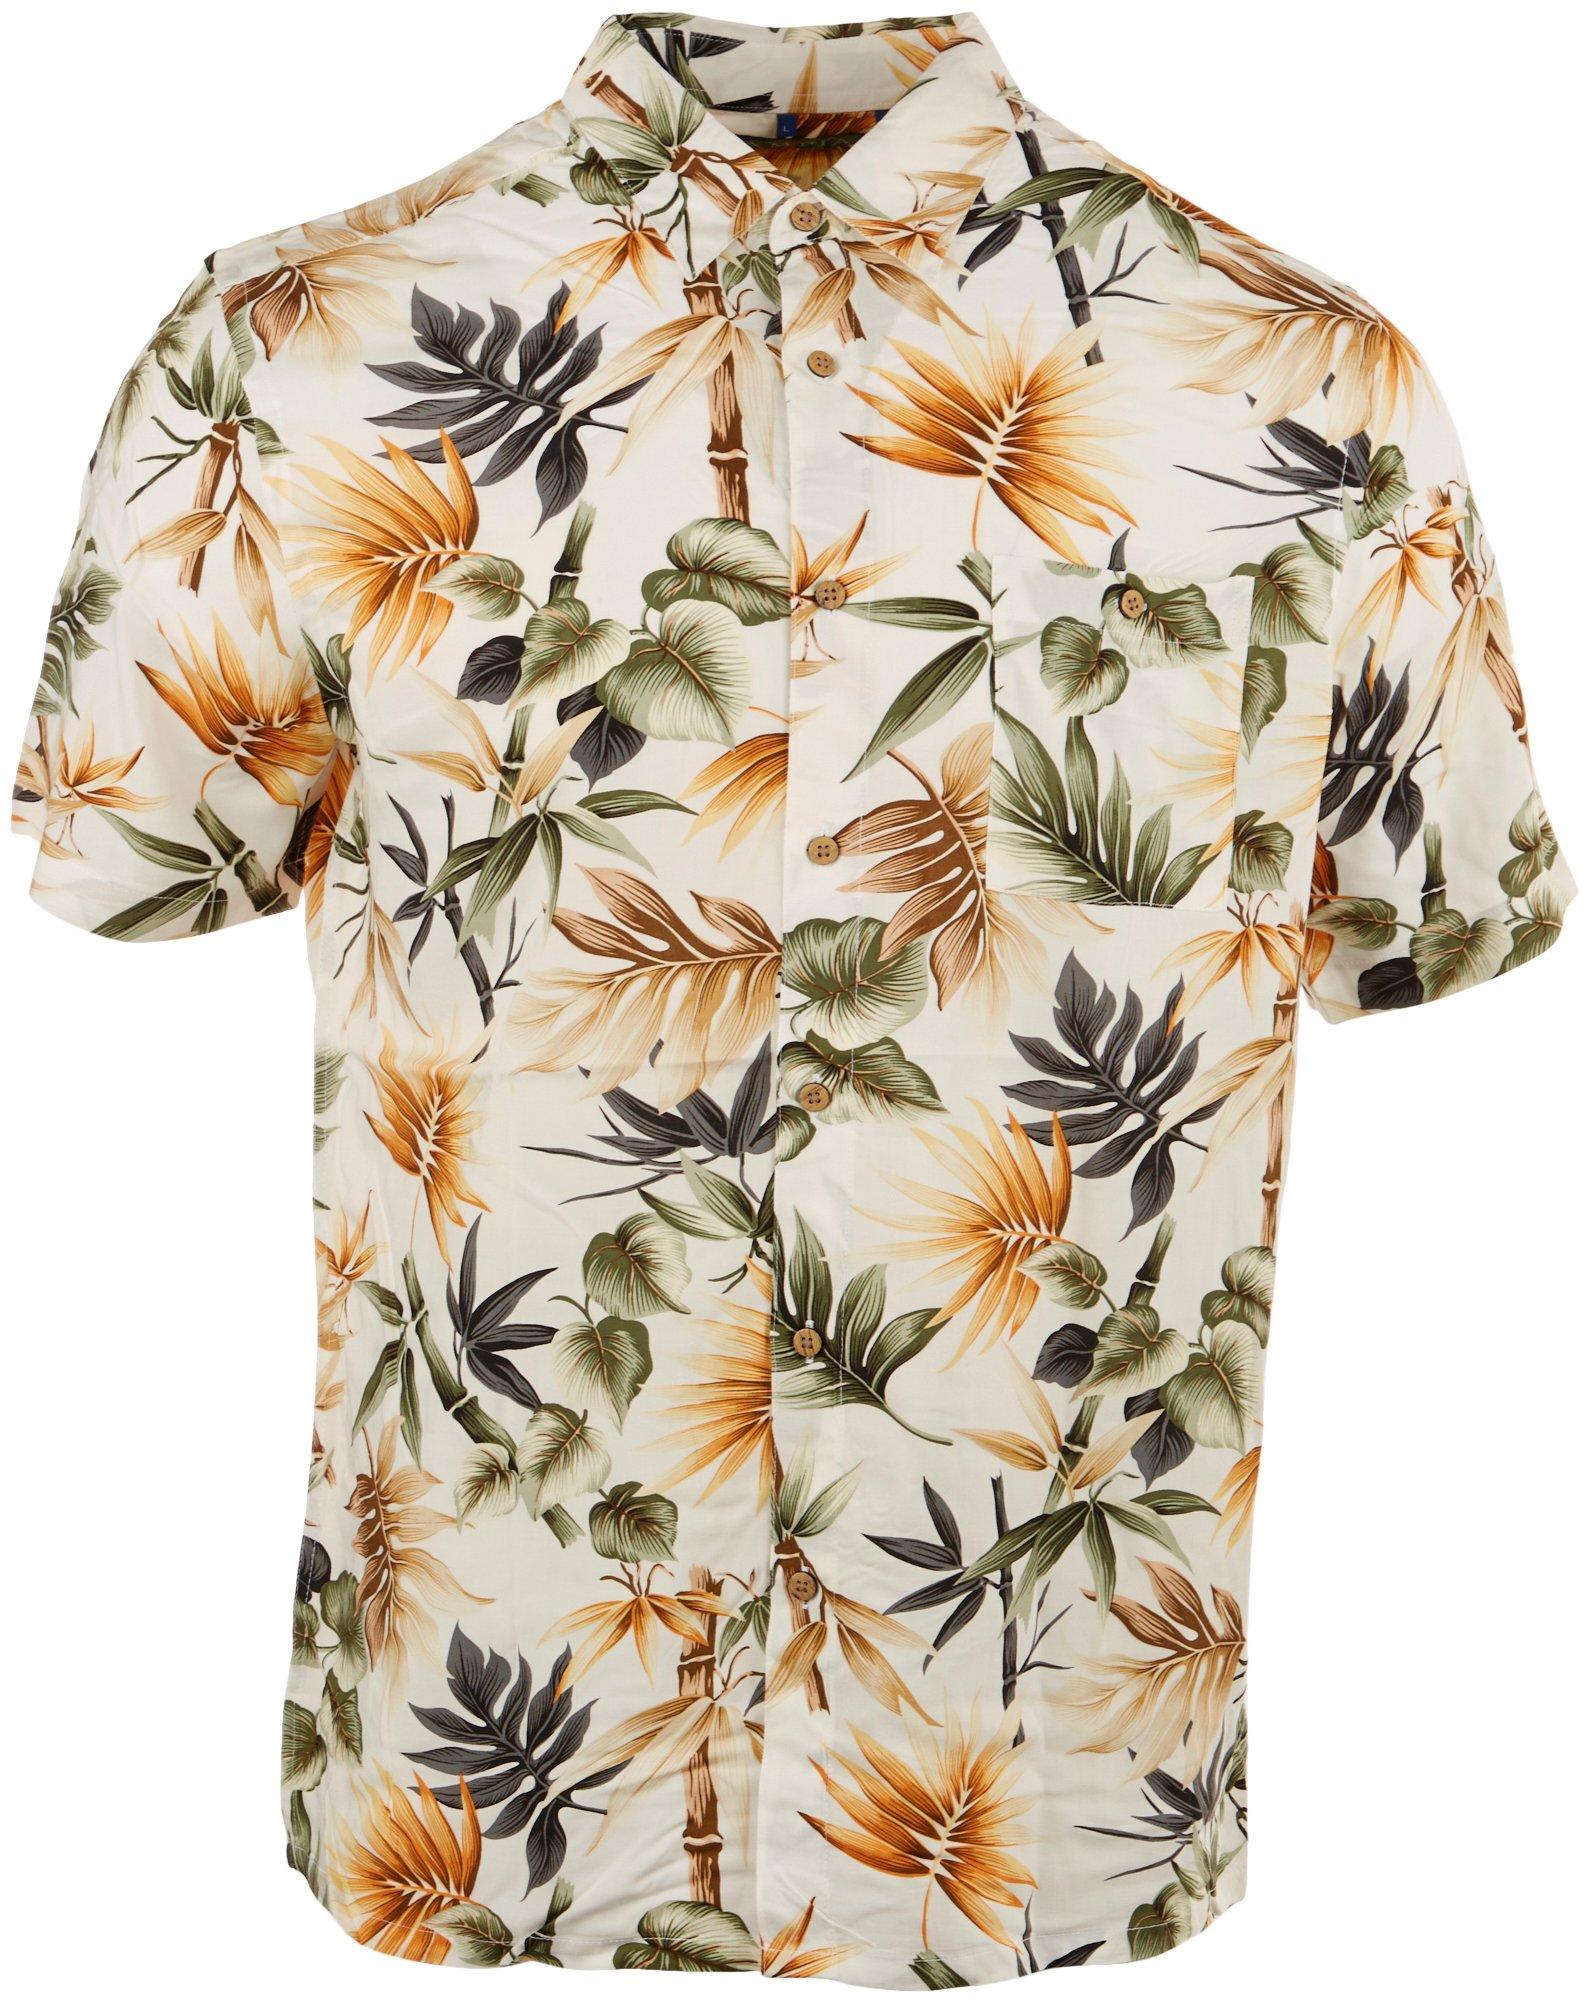 CAMPIA MODA Mens Tropical Print Short Sleeve Shirt